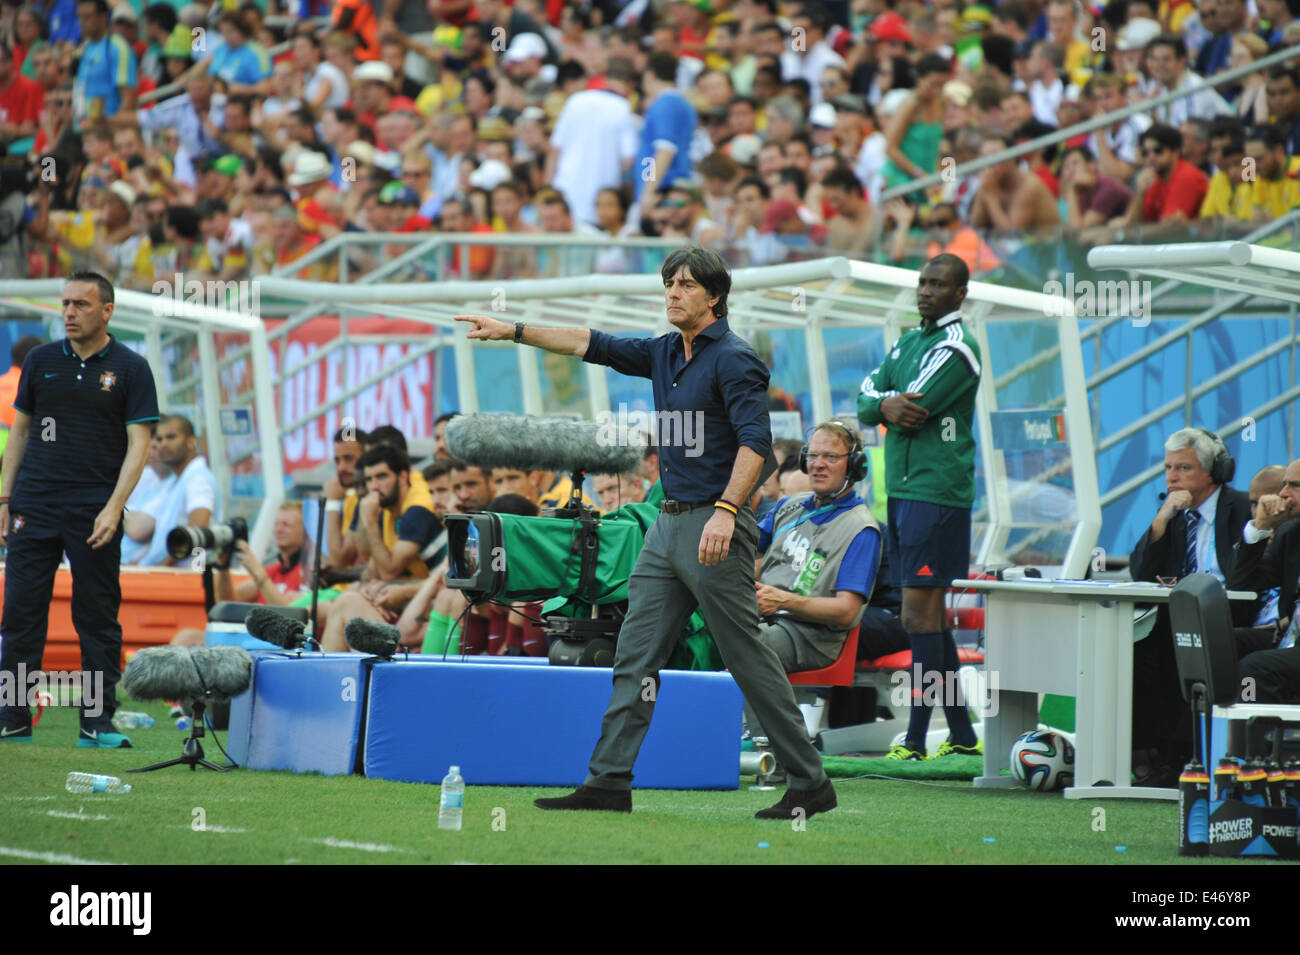 WM 2014, Salvador da Bahia, Jogi Löw gibt Les, Deutschland vs Portugal. Usage éditorial uniquement. Banque D'Images